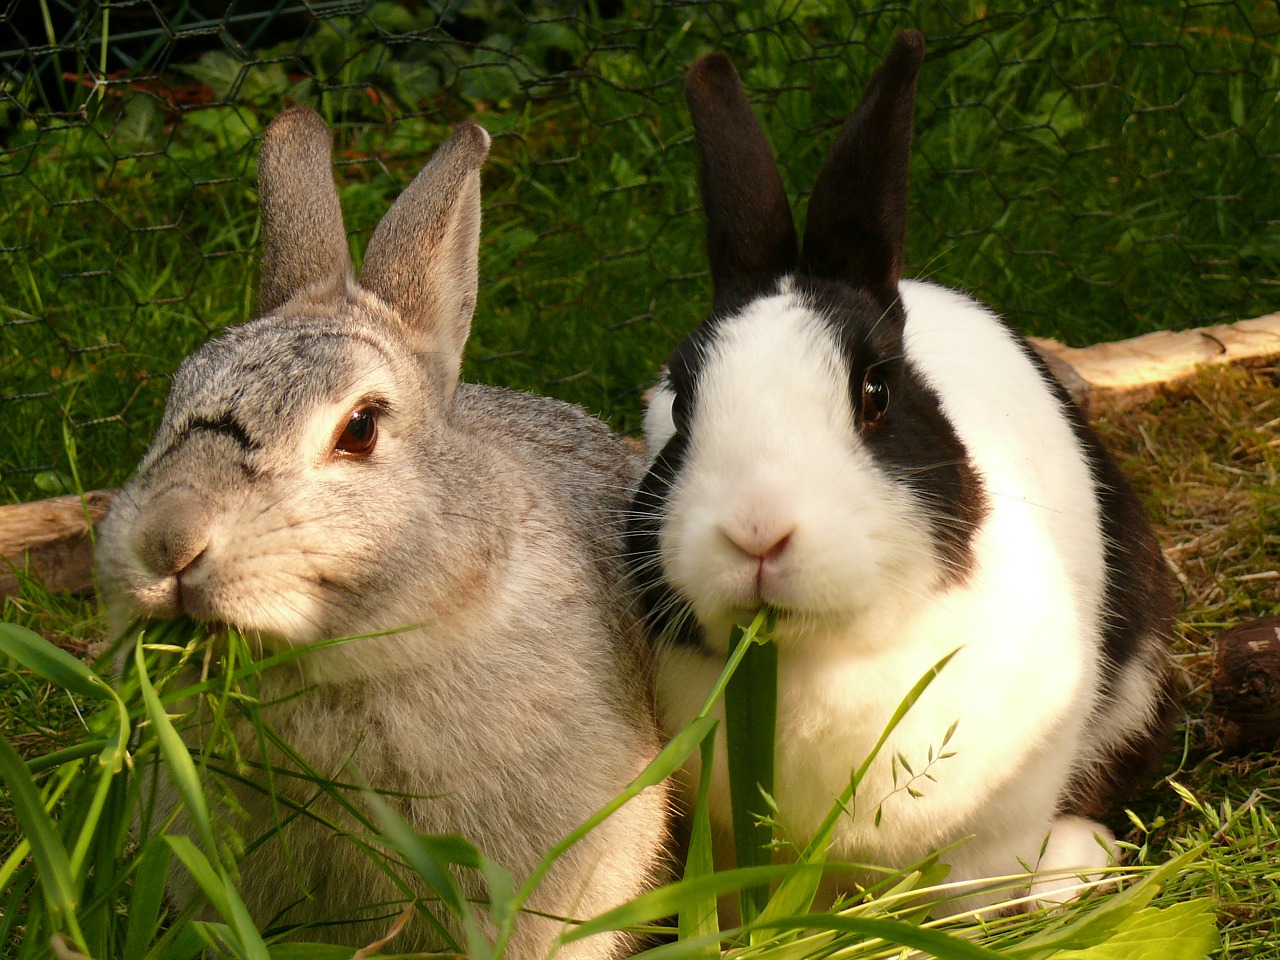 Can Rabbits Eat Celery? – Rabbit Feeding Tips